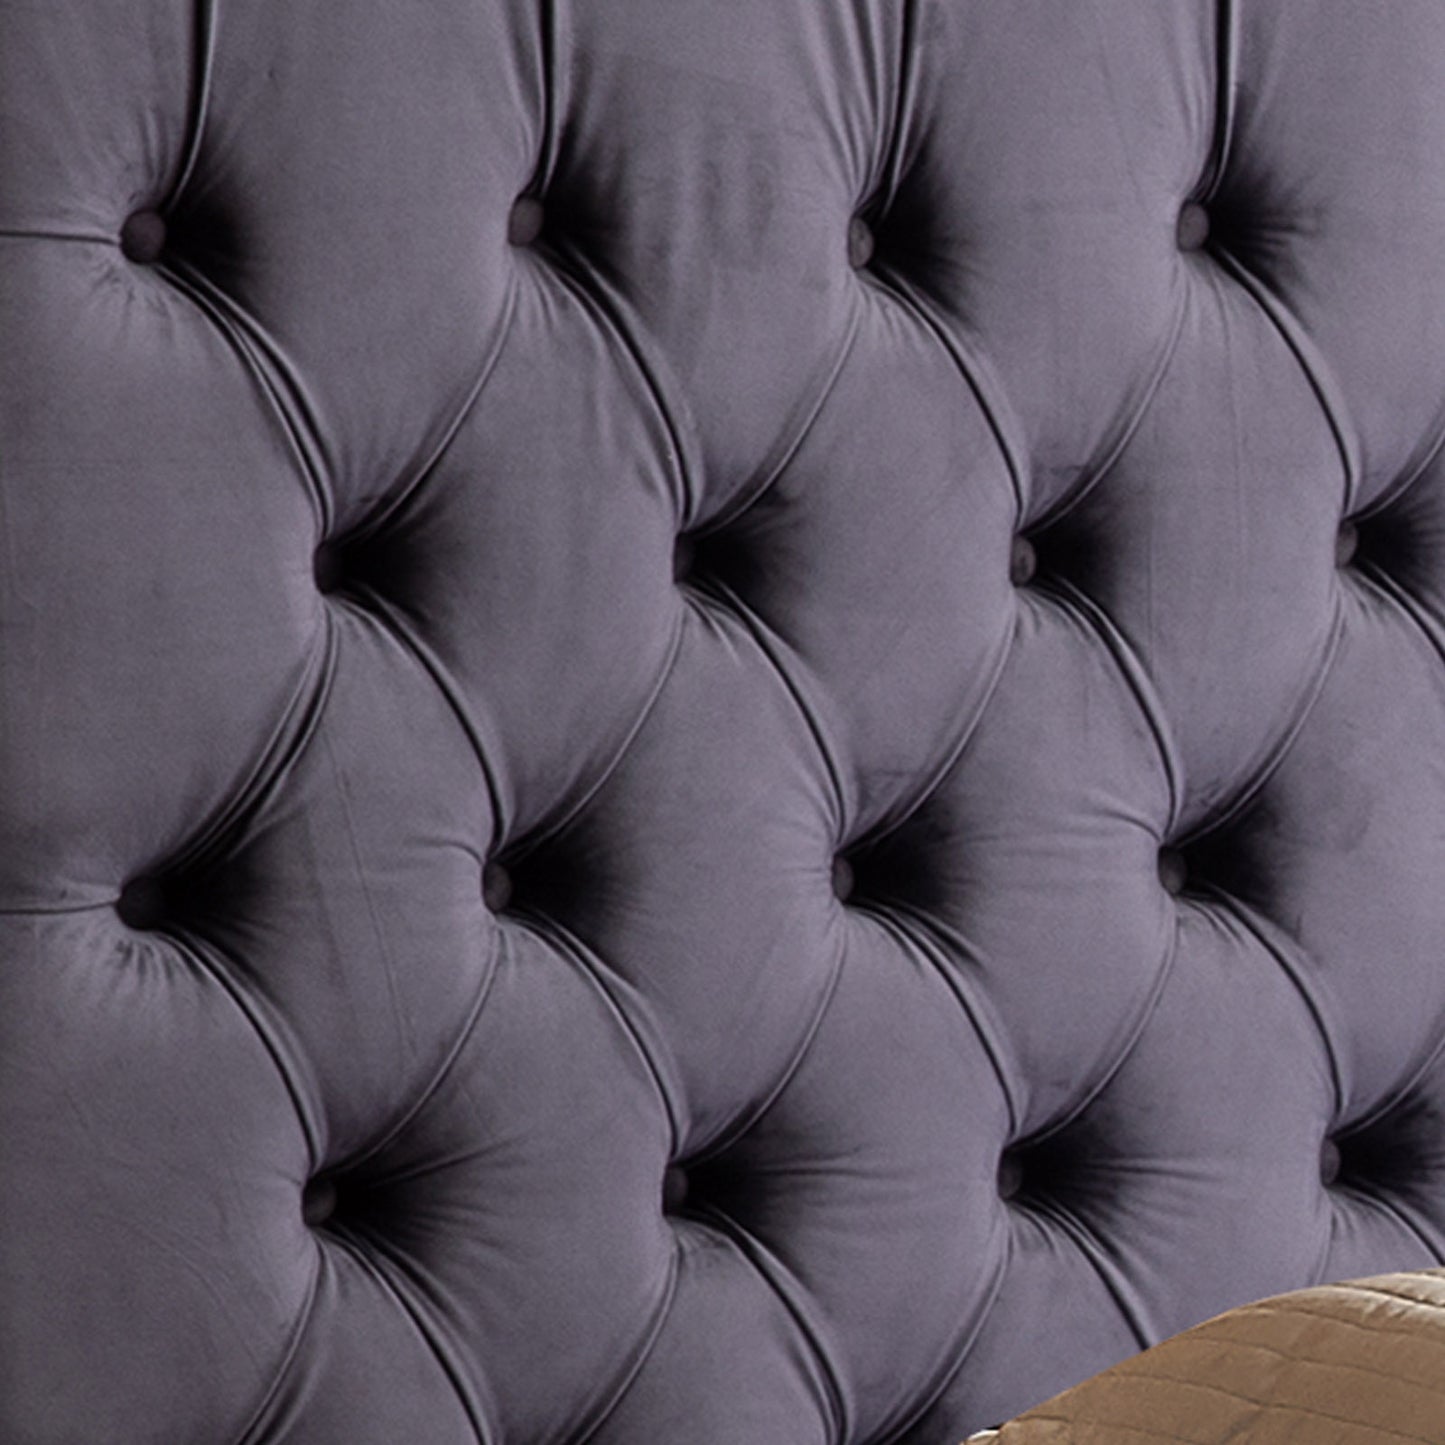 Leida Bedframe Velvet Upholstery Tufted Headboard Deep Quilting - Dark Grey King